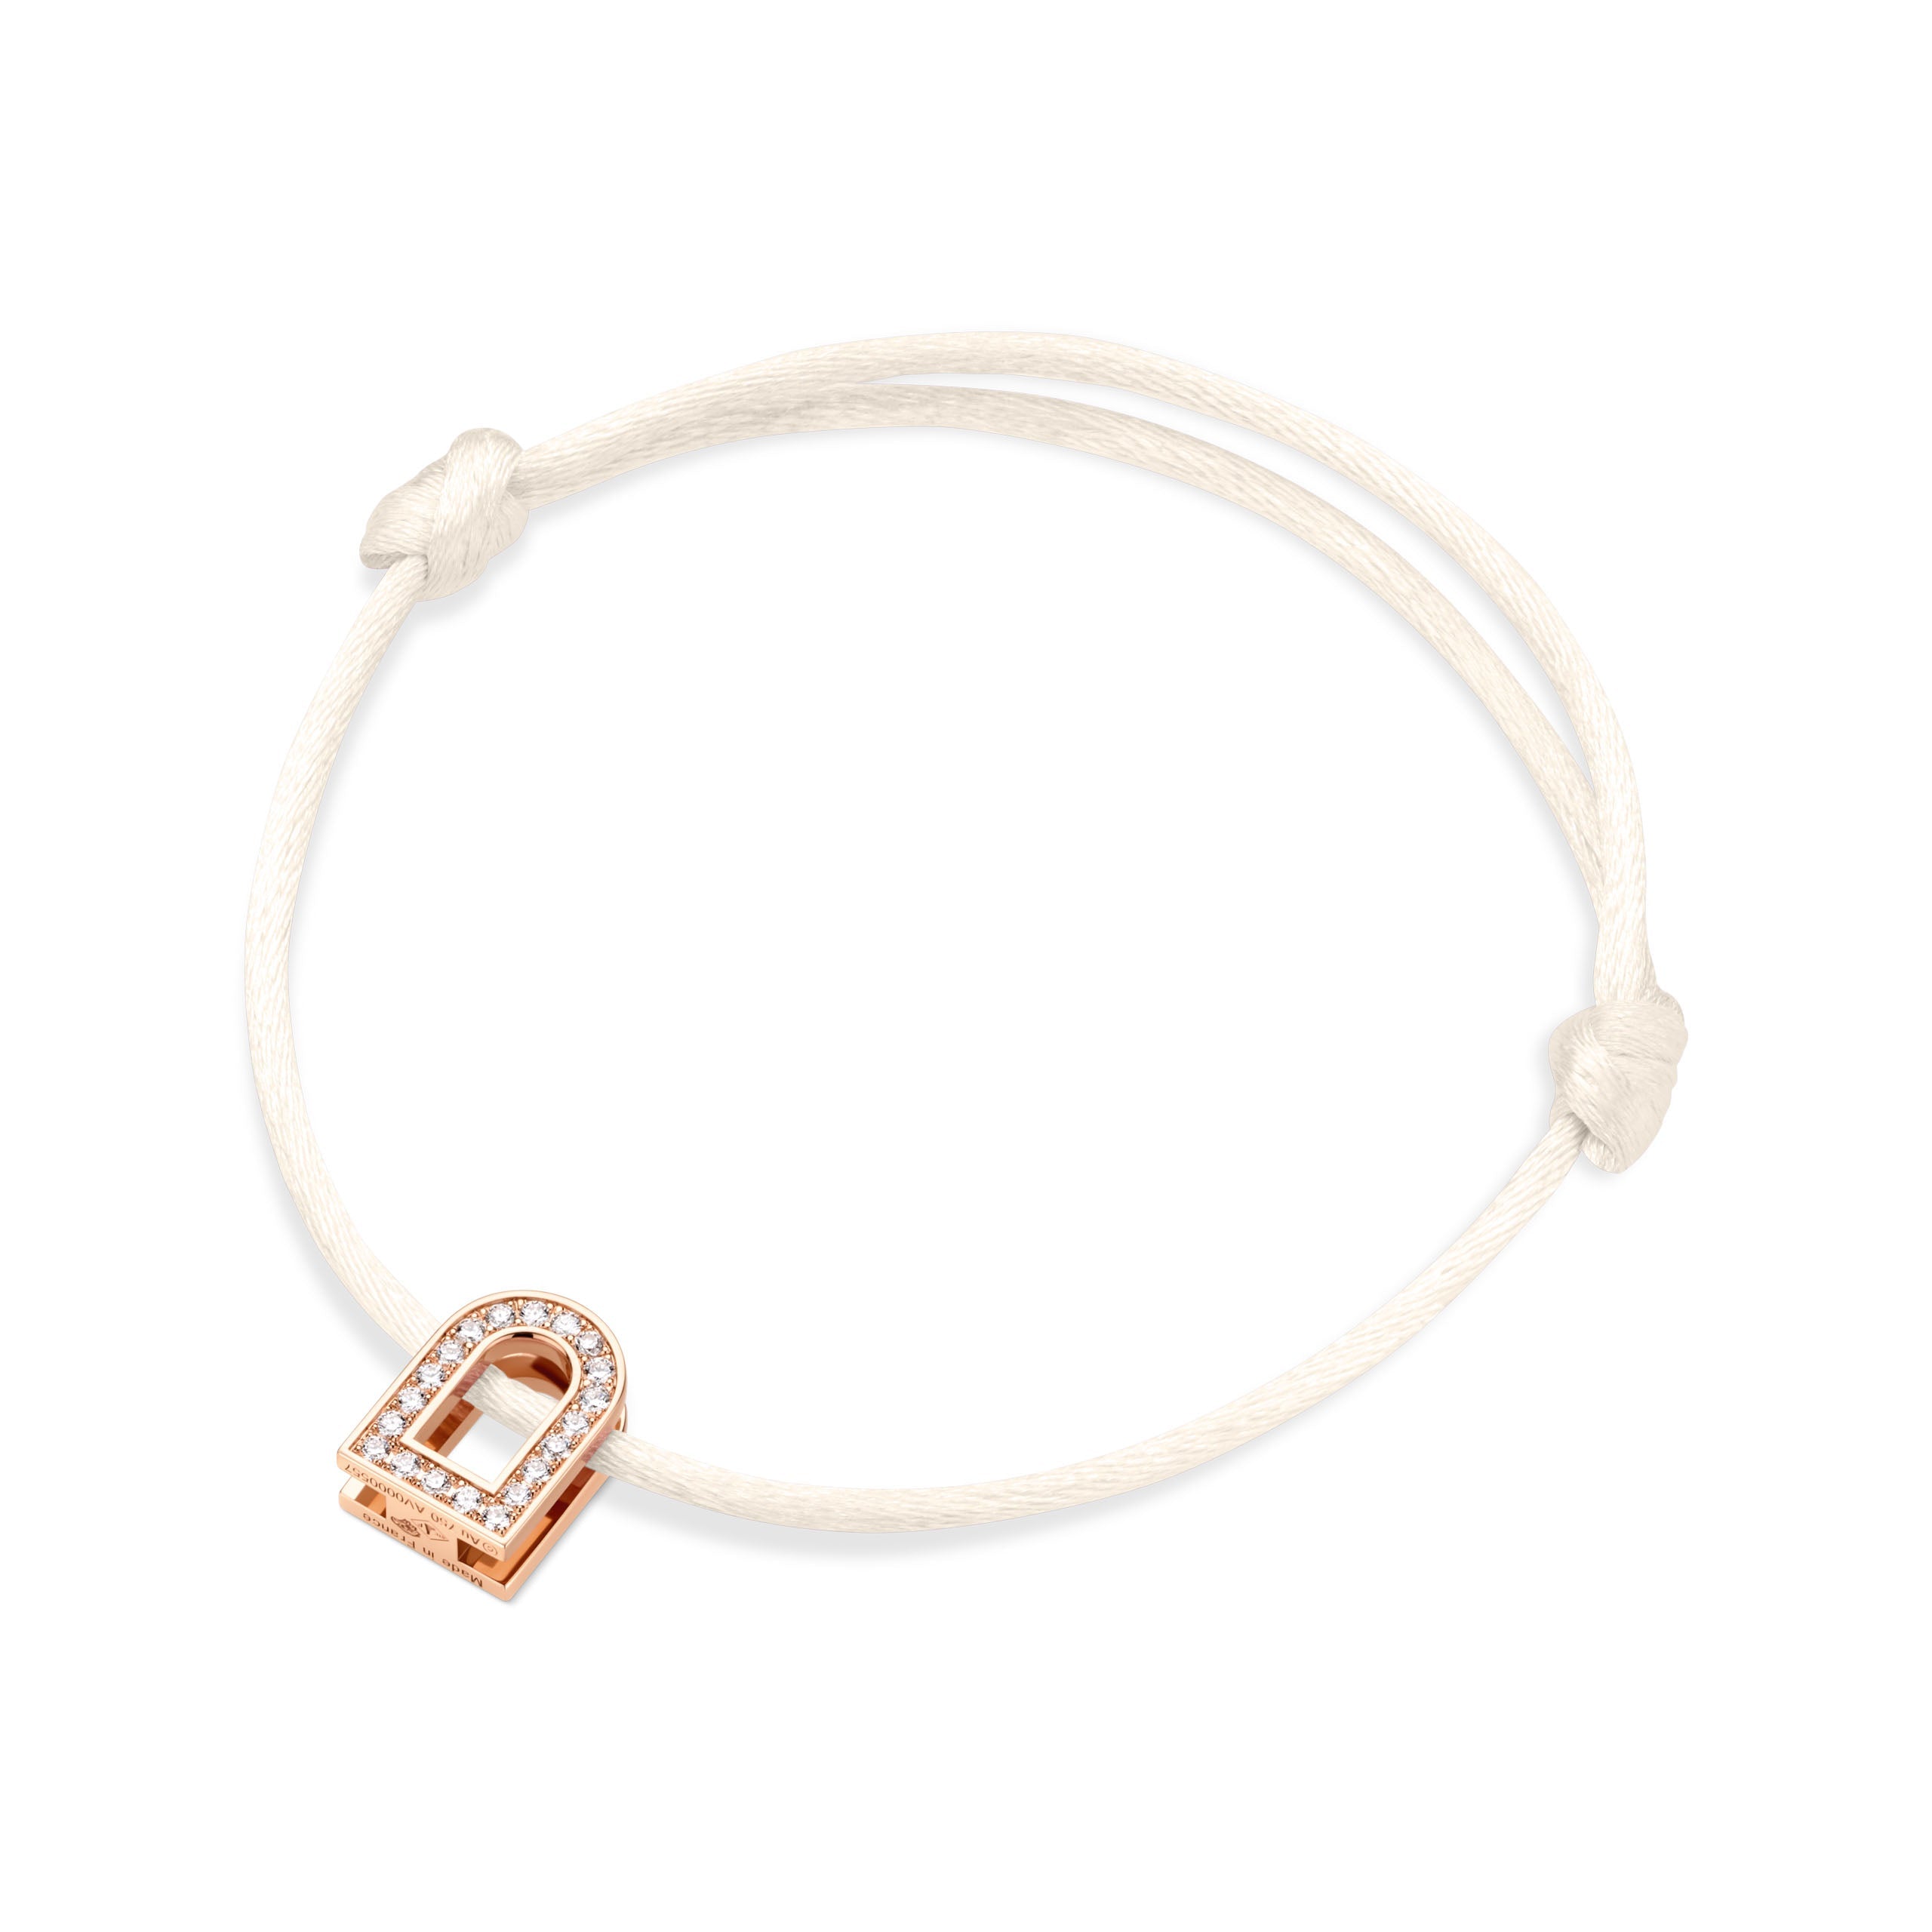 L’Arc Voyage Charm PM, 18k Rose Gold with Galerie Diamonds on Silk Cord Bracelet